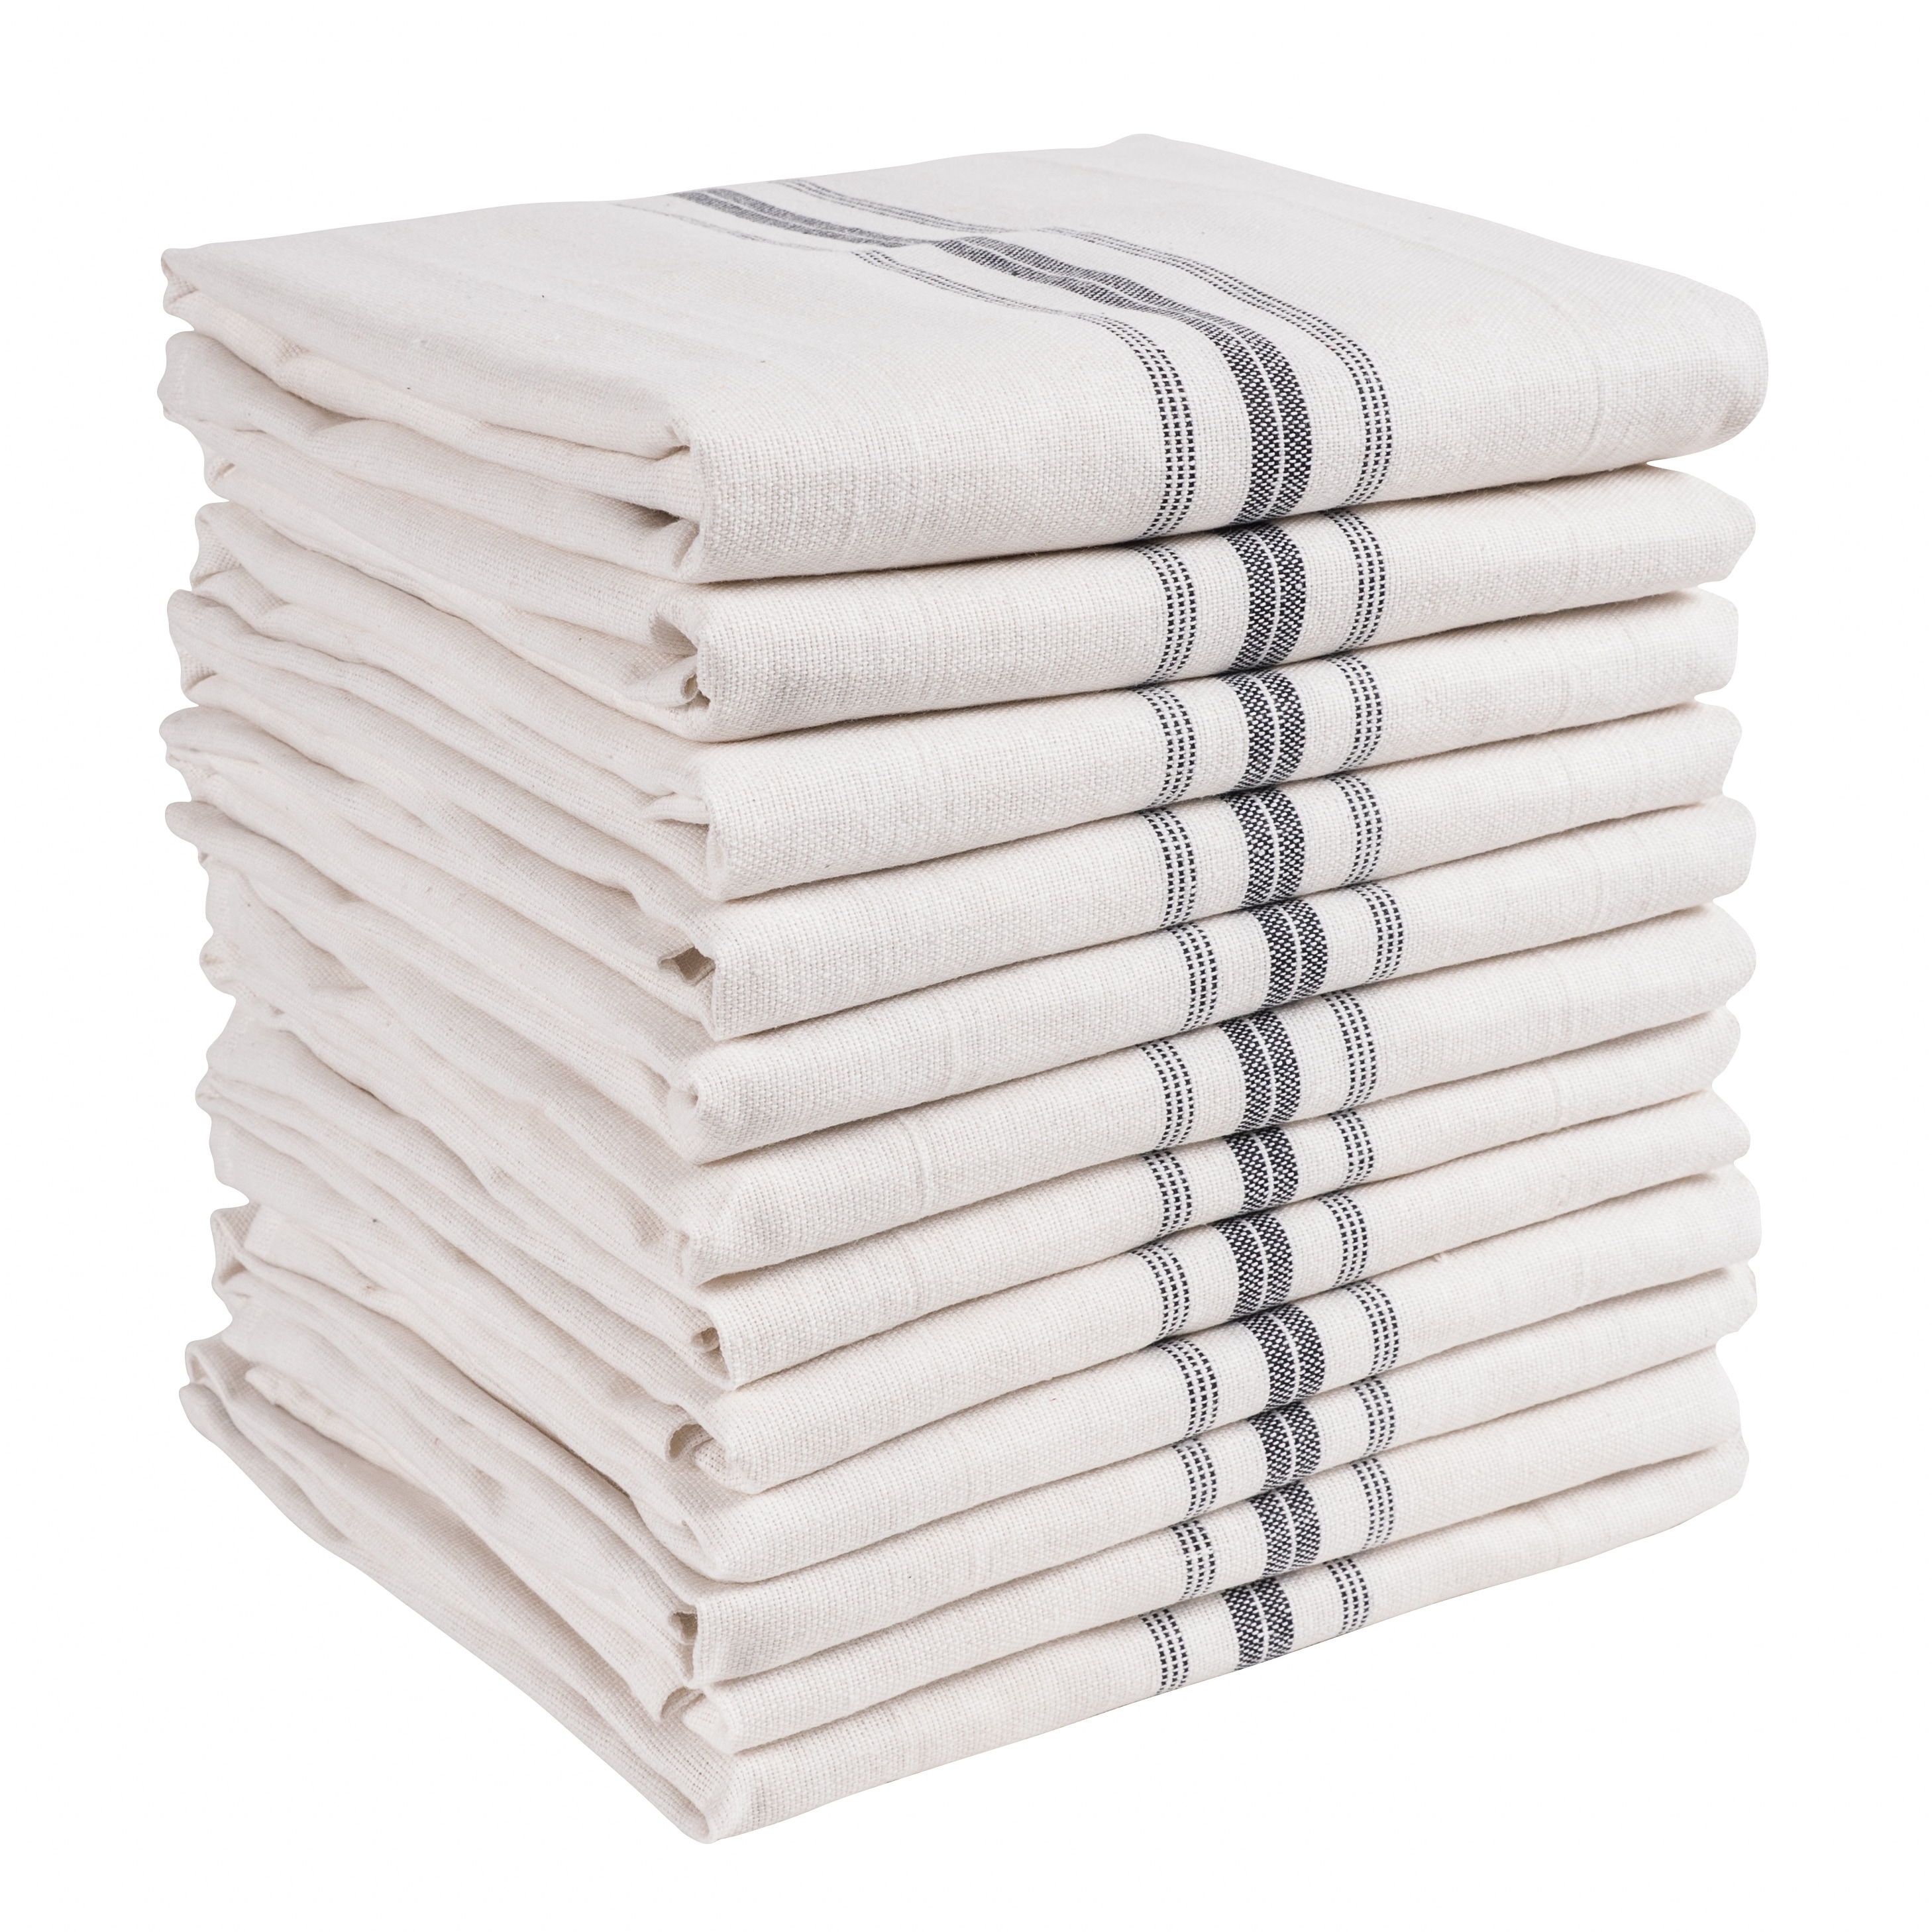 https://ak1.ostkcdn.com/images/products/is/images/direct/861d587dd1180908e1fdc9e0d49076b4f63b9d24/Classic-Cotton-Stripe-Towels%2C-Set-of-12.jpg